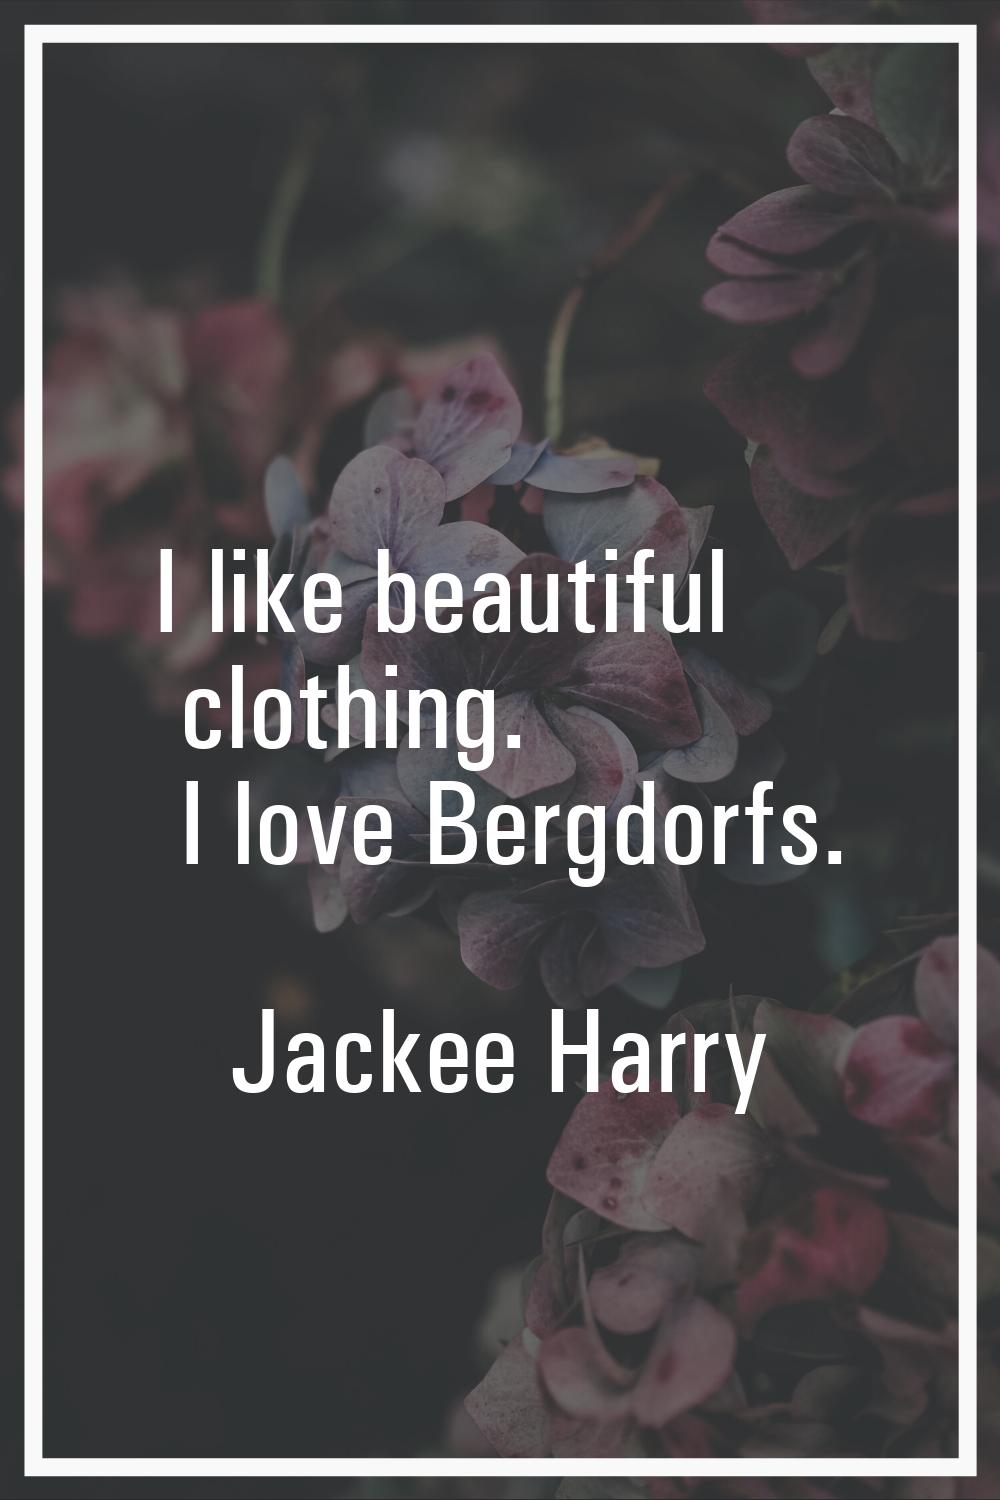 I like beautiful clothing. I love Bergdorfs.